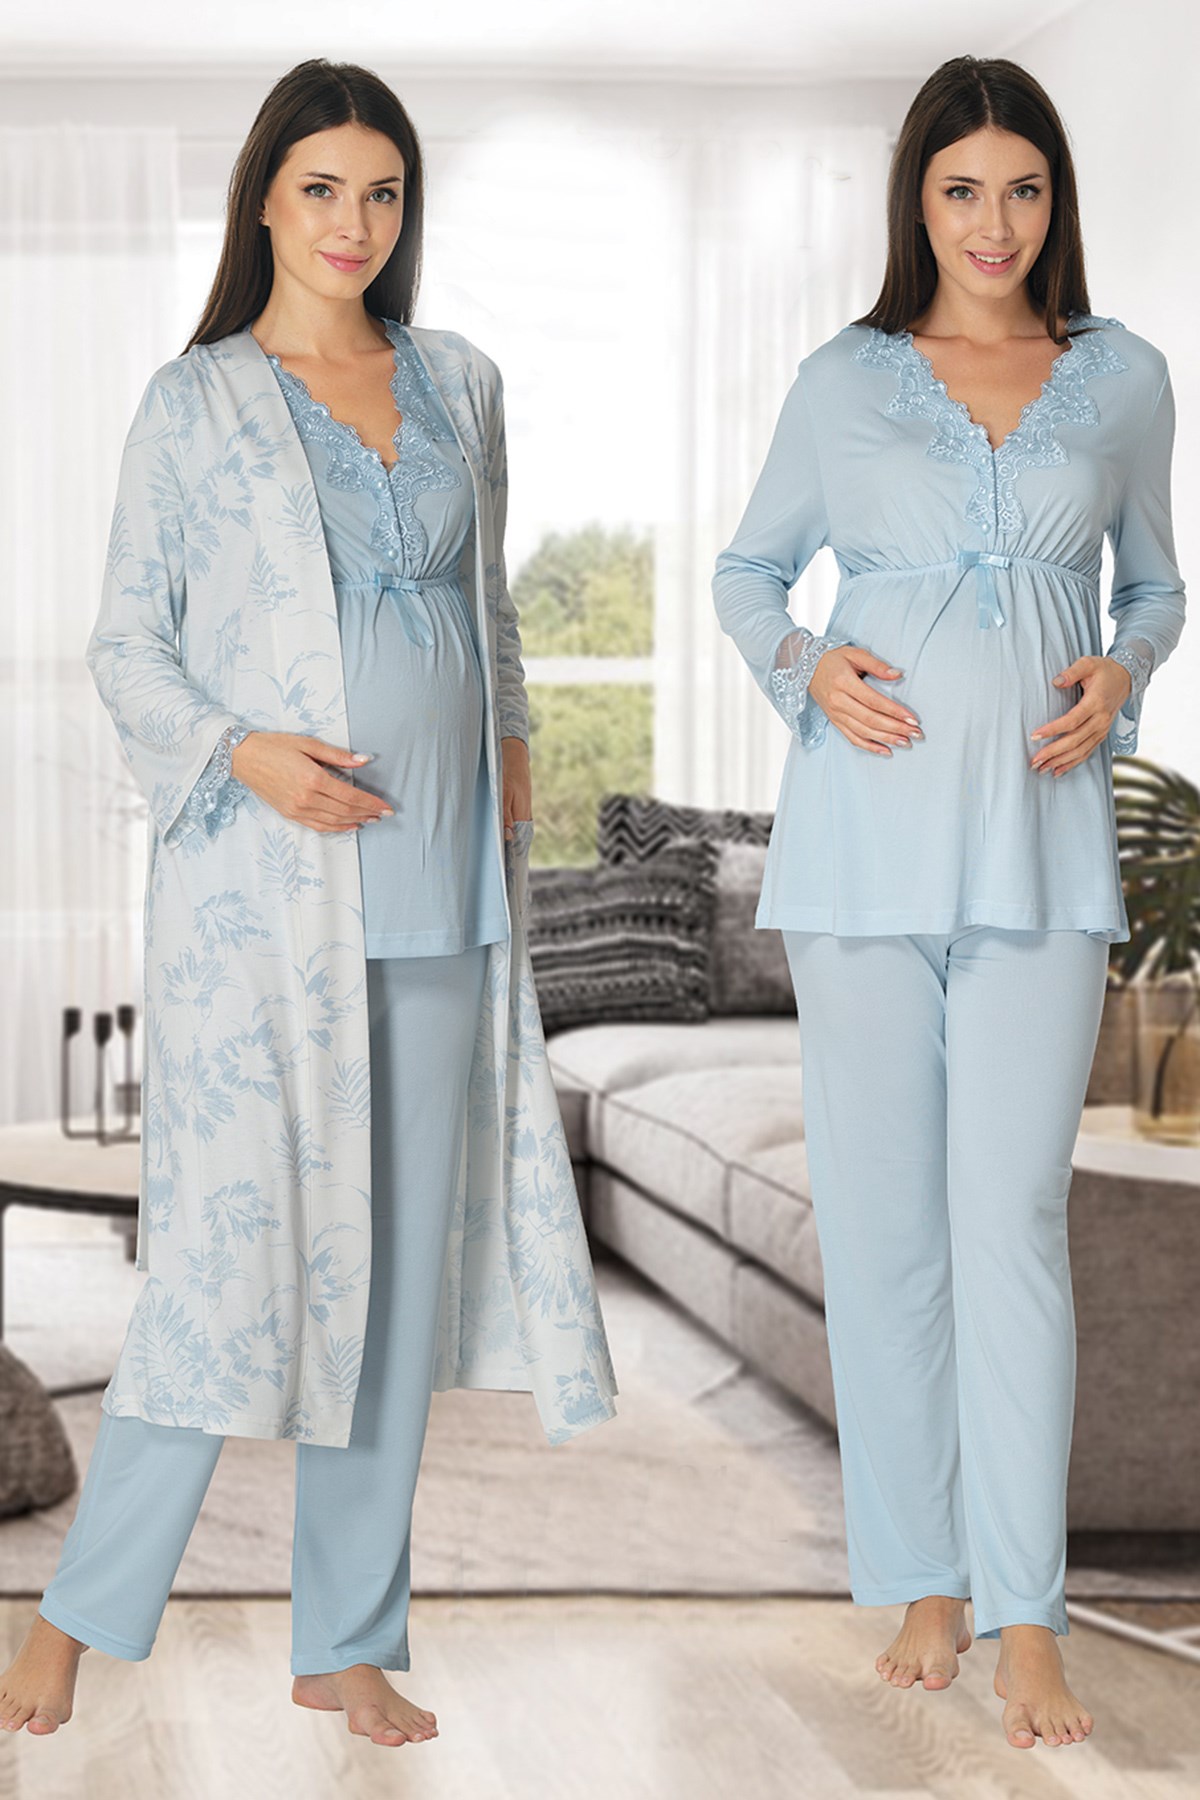 Effortt 8094 Baby Blue Patterned Maternity Pajama and Robe Set